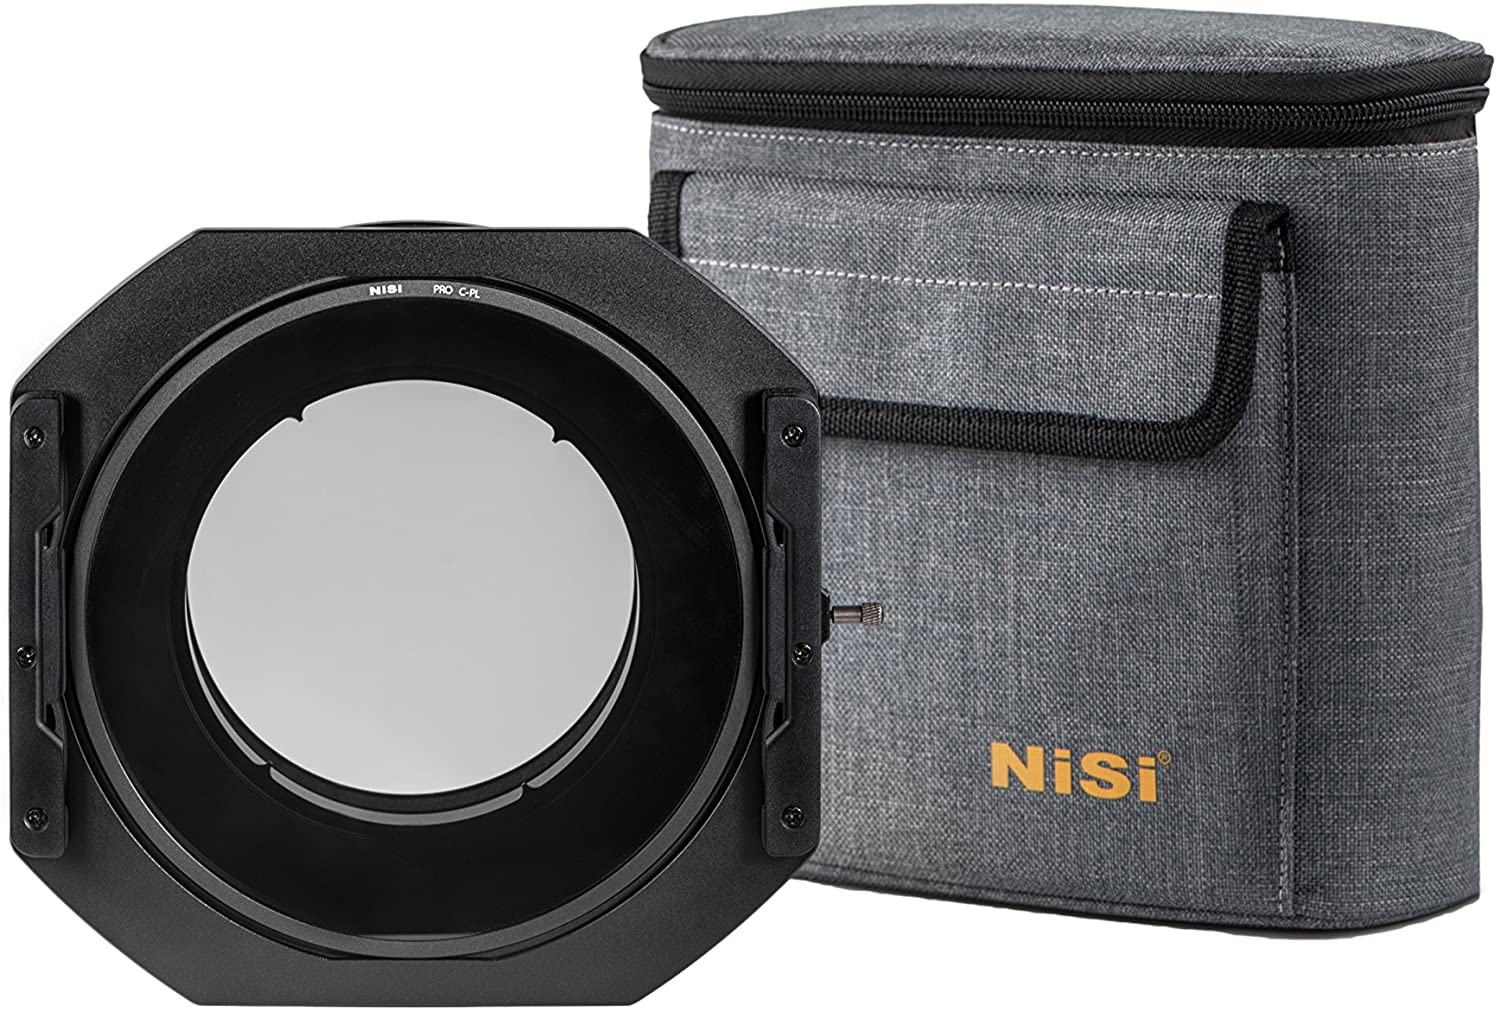 NiSi 150mm system filter holder Kit S5 For SIGMA 14ｍｍ F1.8 システムフィルターホルダーキット<br>150mm角型レンズフィルター専用 ホルダーキット